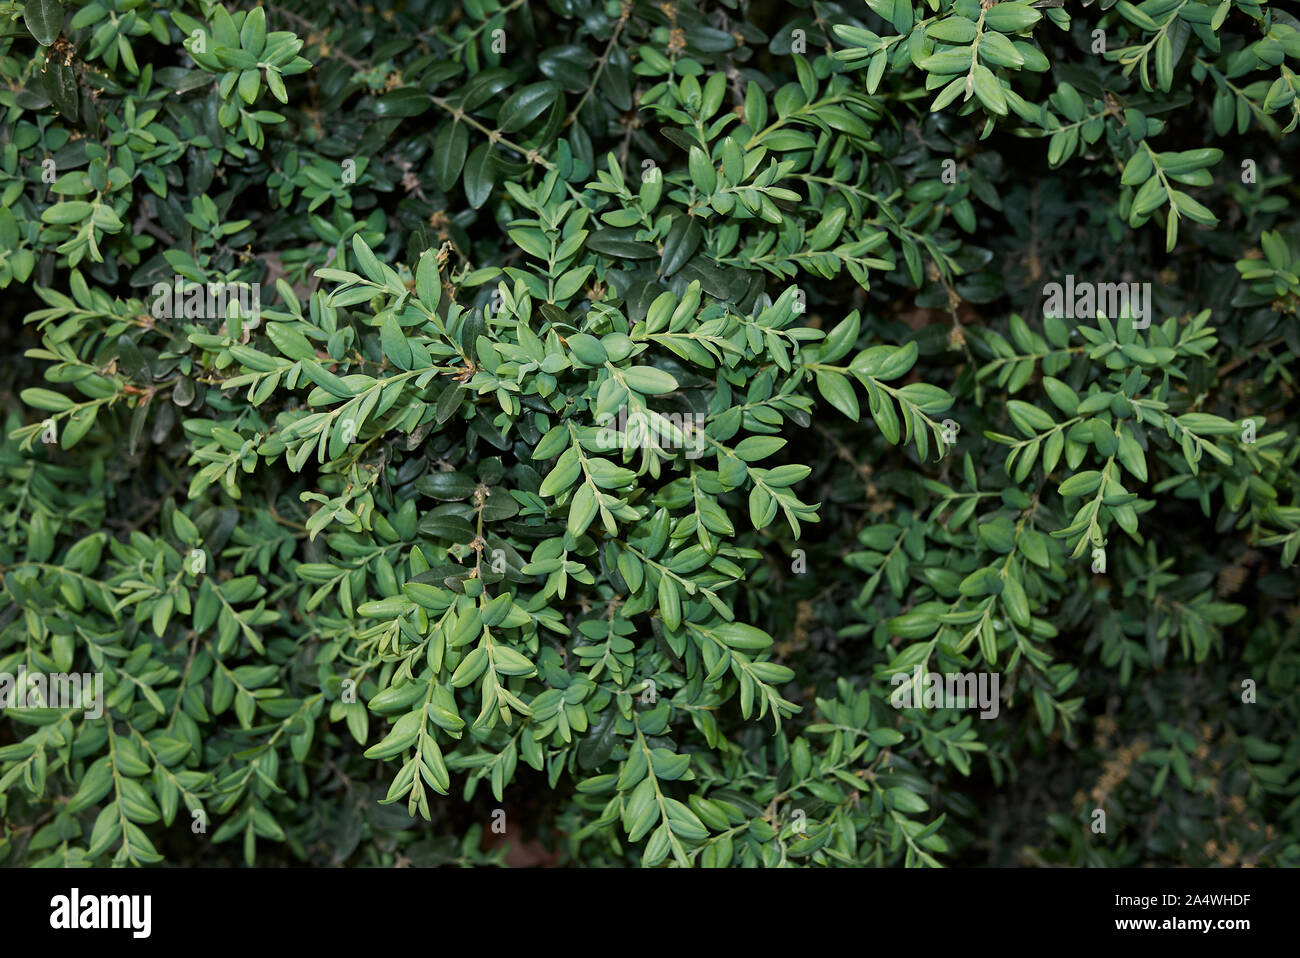 evergreen foliage of Buxus sempervirens shrub Stock Photo